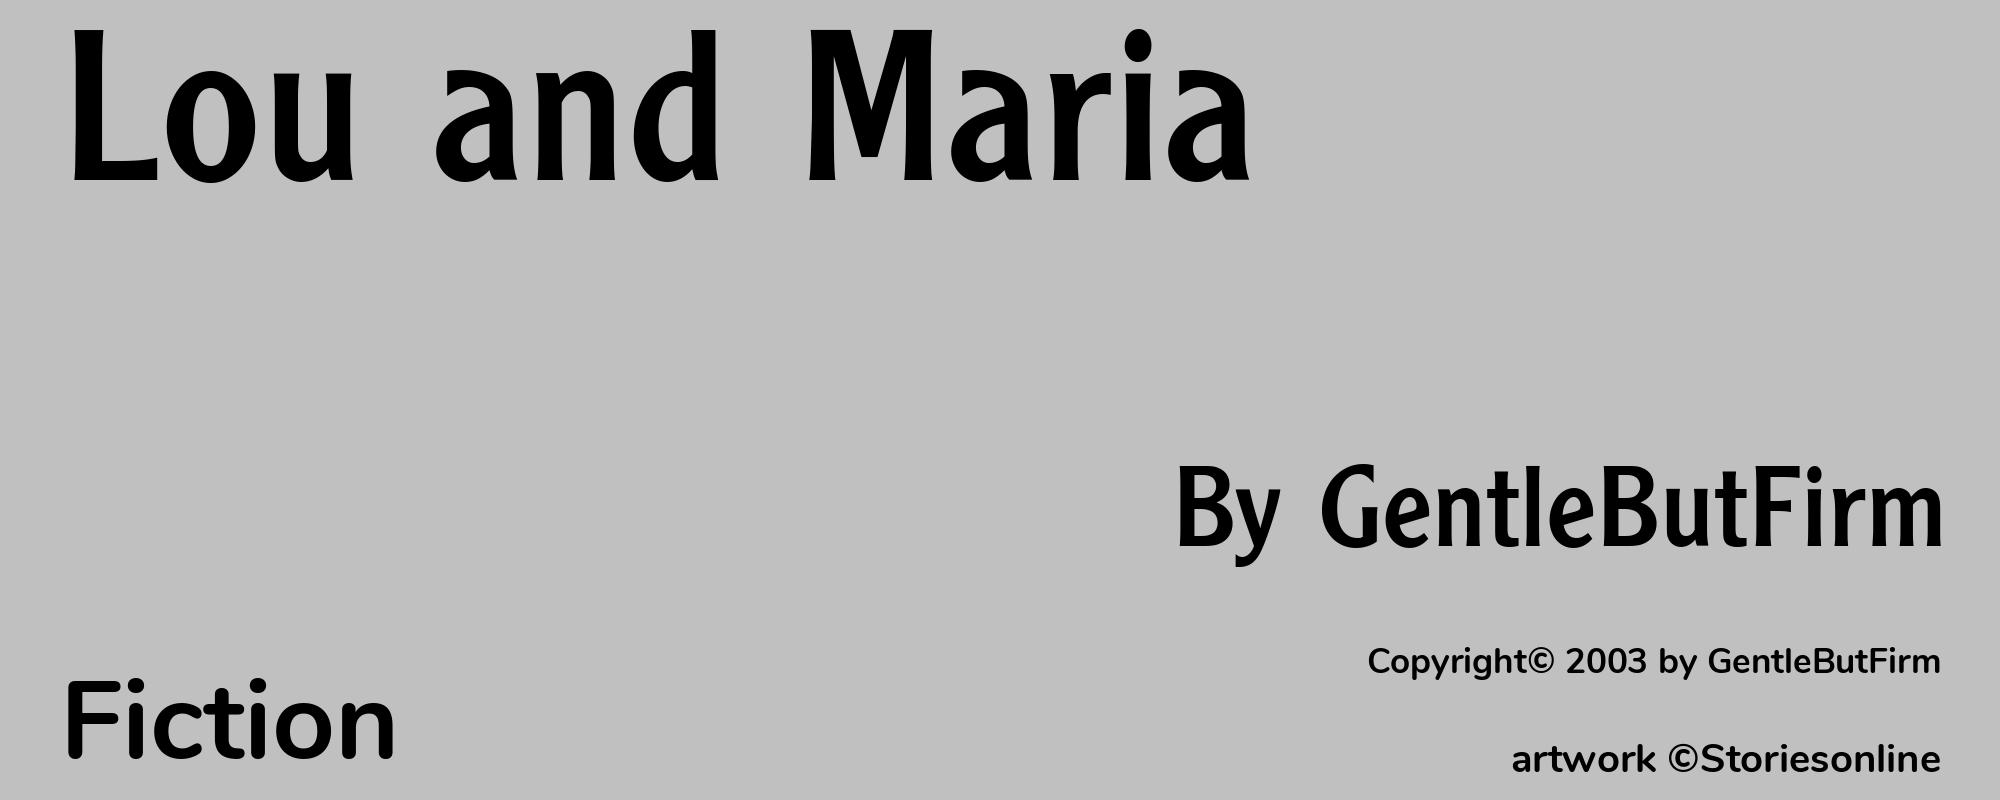 Lou and Maria - Cover